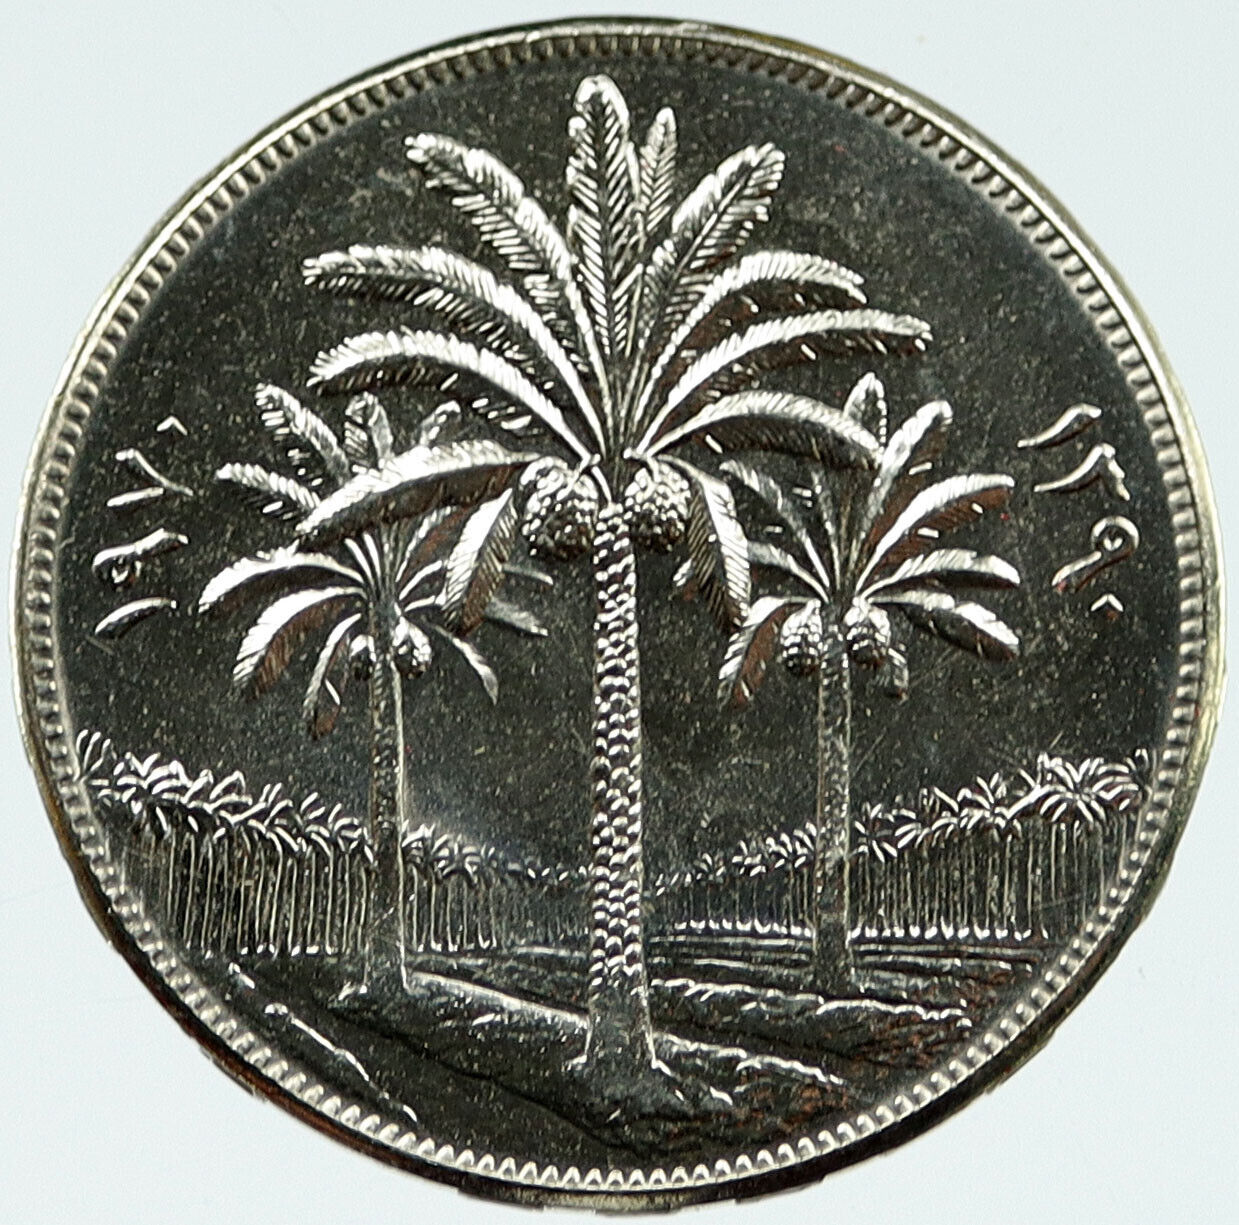 1970 Iraq 250 fils FAO 12th Anniversary of Land Reform Nickel Coin i117311